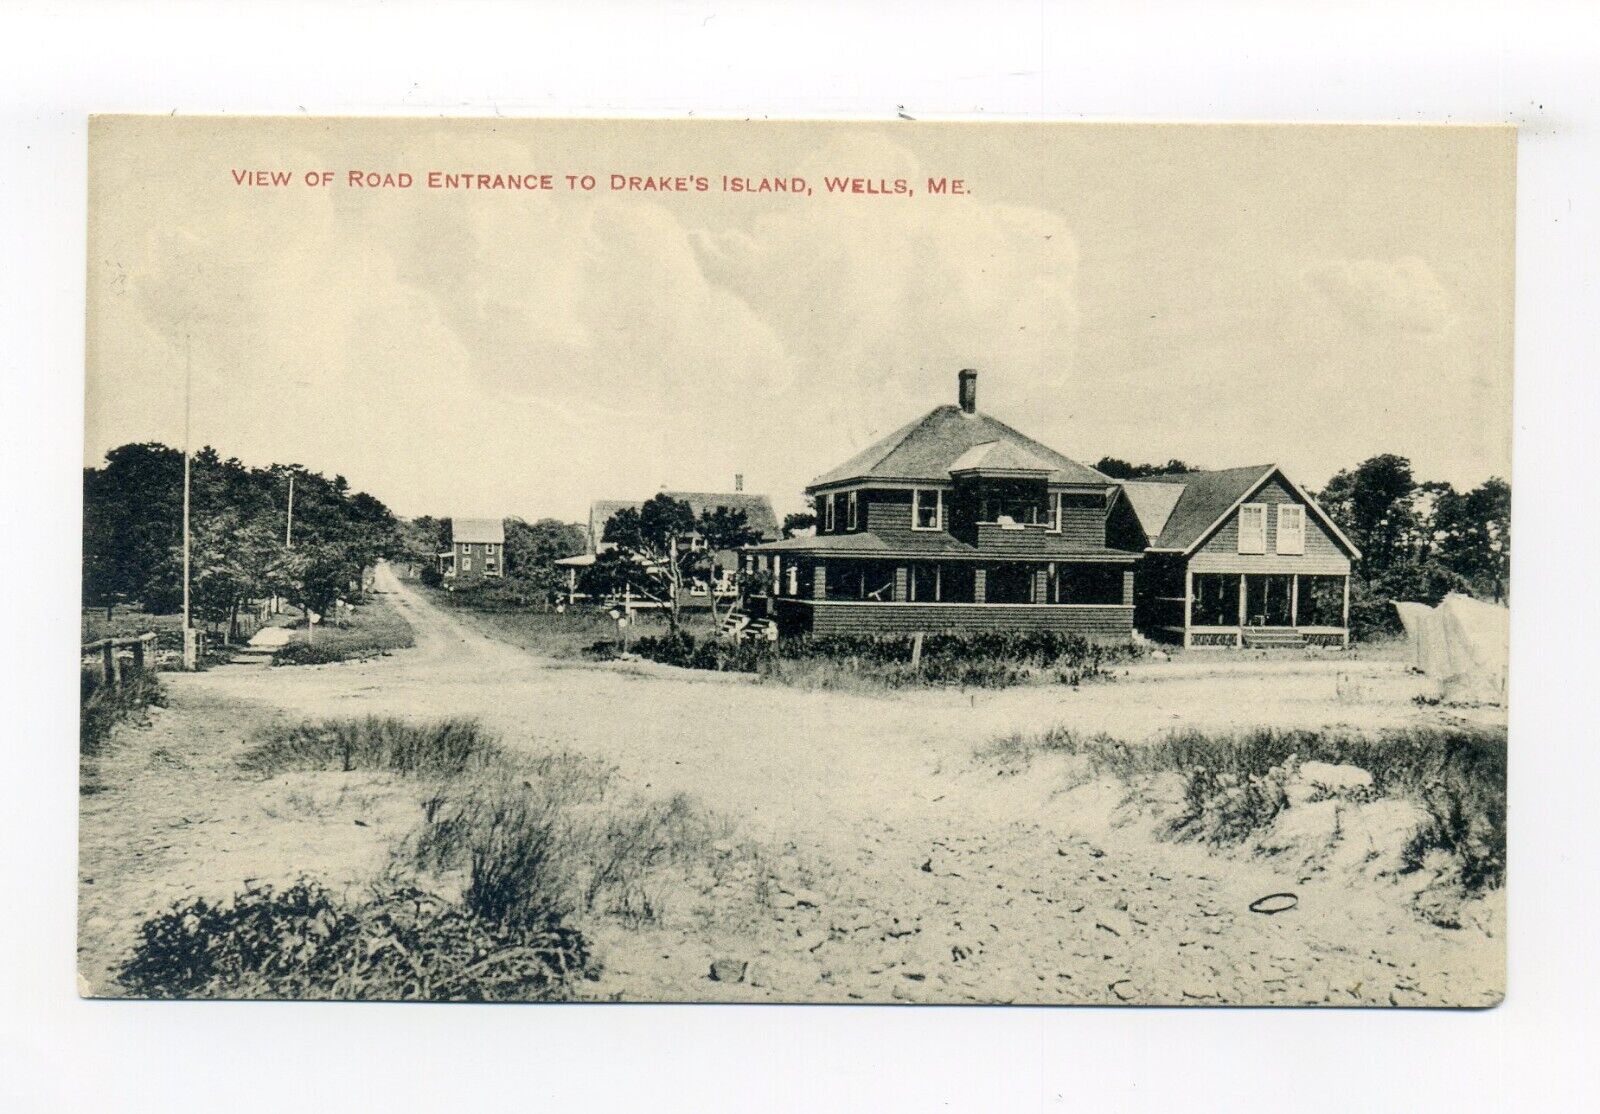 Drake's Island, Wells ME postcard, road entrance, cottages, rough dirt street